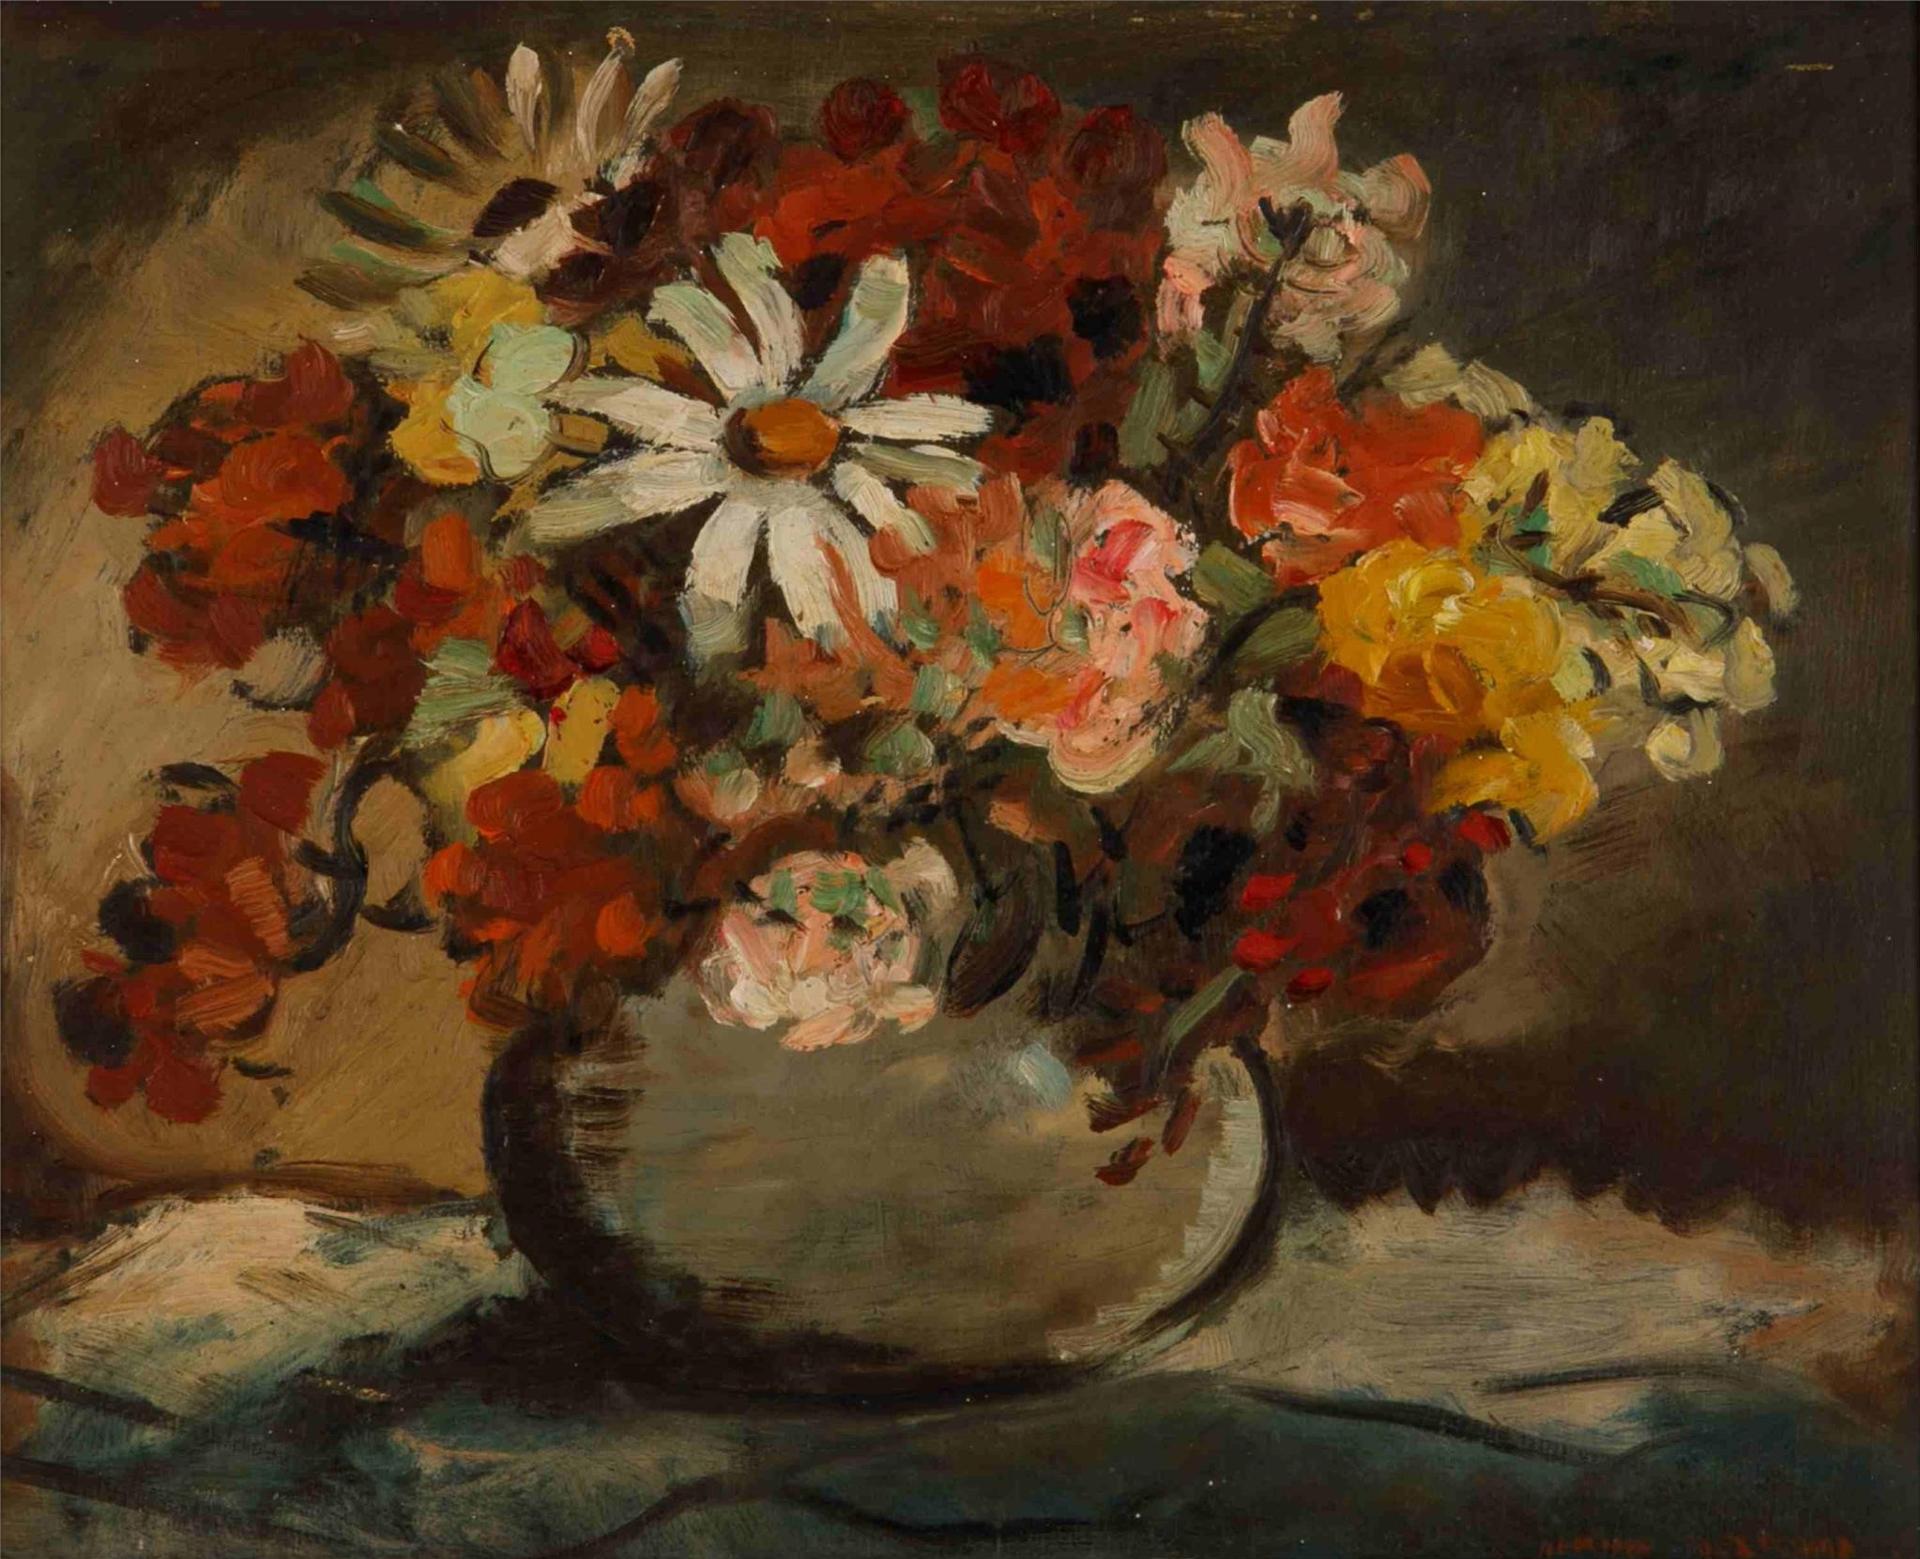 Nerine Constantia Desmond (1908-1993) - Floral Still Life